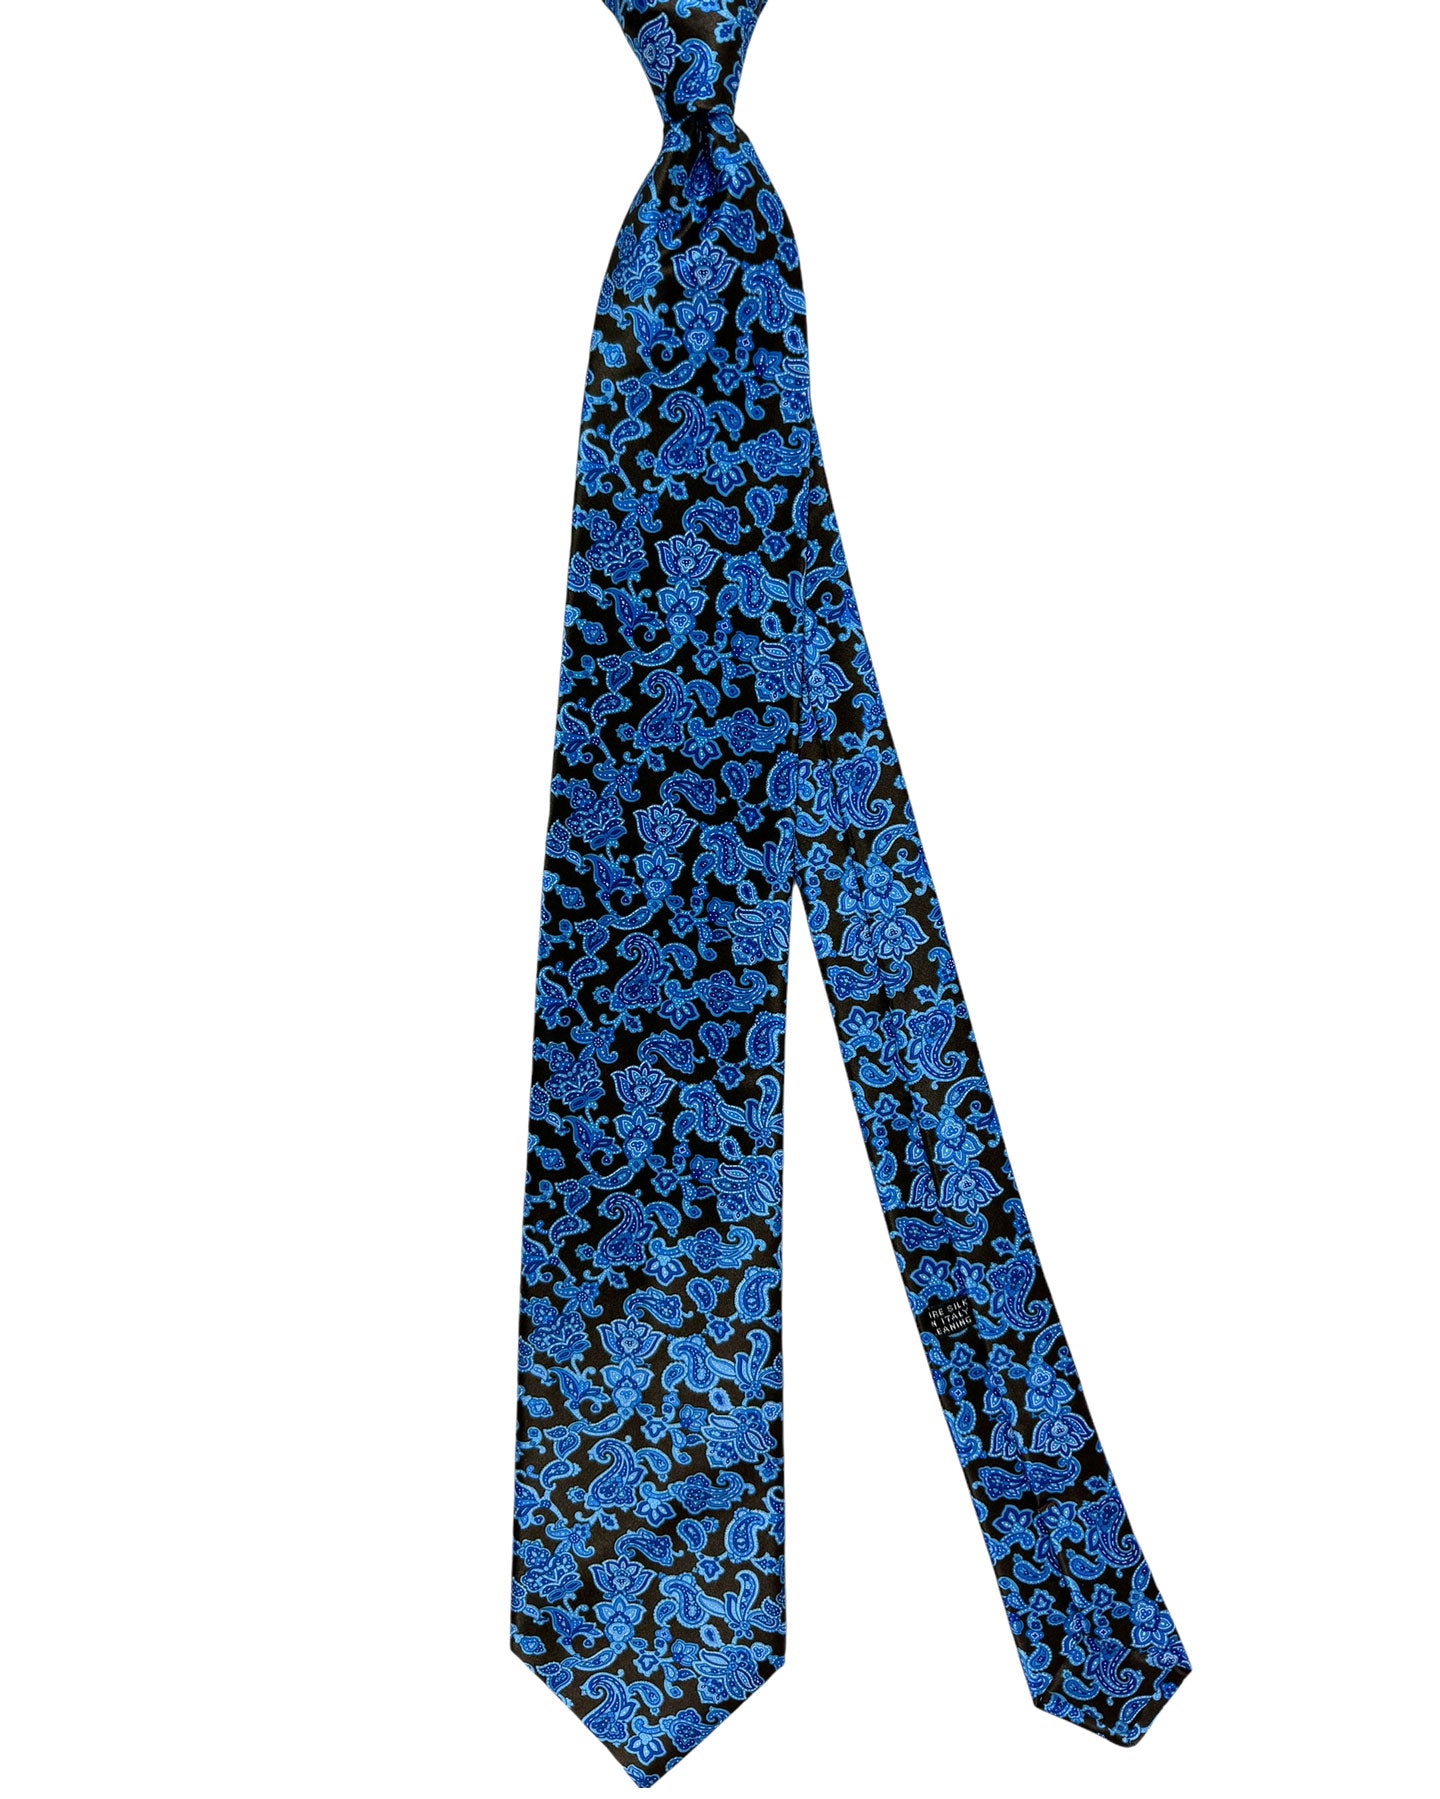 Stefano Ricci Silk Tie Royal Blue Blue Paisley Design